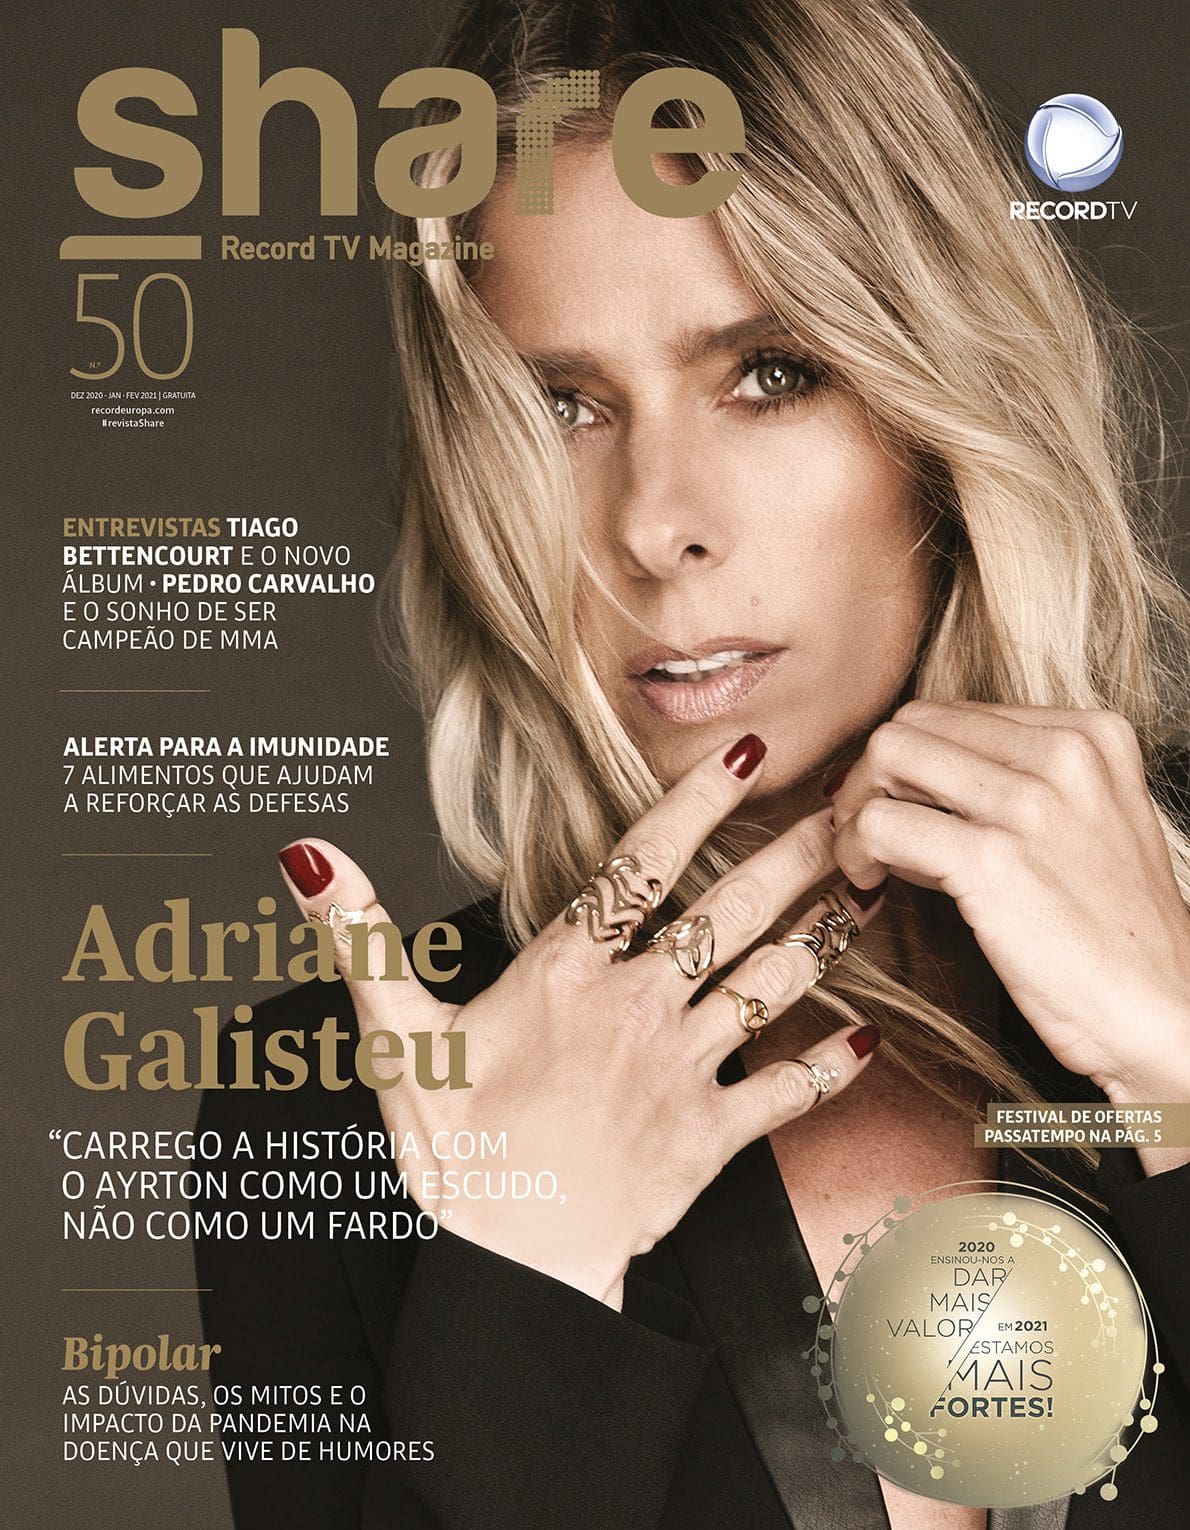 Share Magazine 50 - Adriane Galisteu